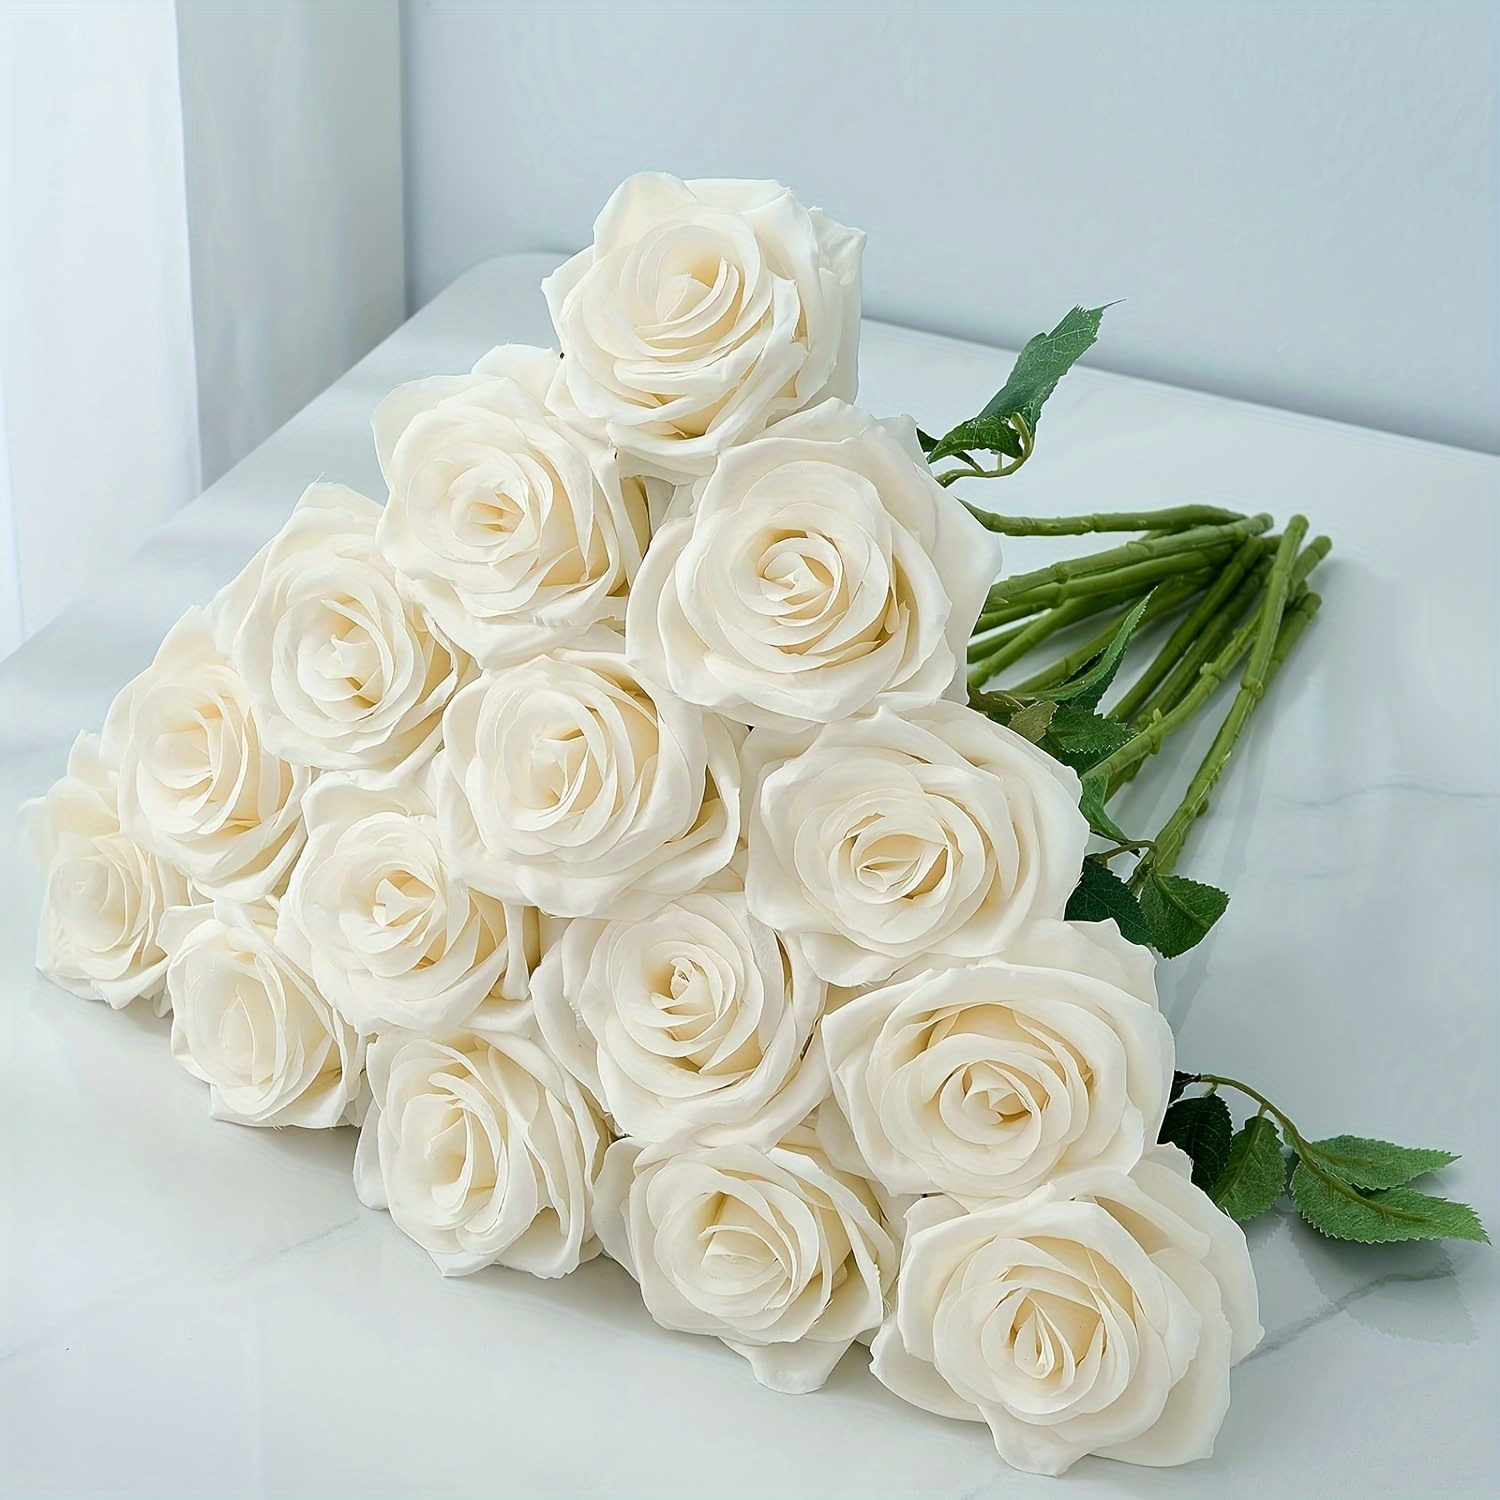 

5pcs/10pcs, Artificial Ivory White Flowers, Silk Roses, Long Stem Fake Bridal Wedding Bouquet Flower, For Home Garden Party Floral Decor